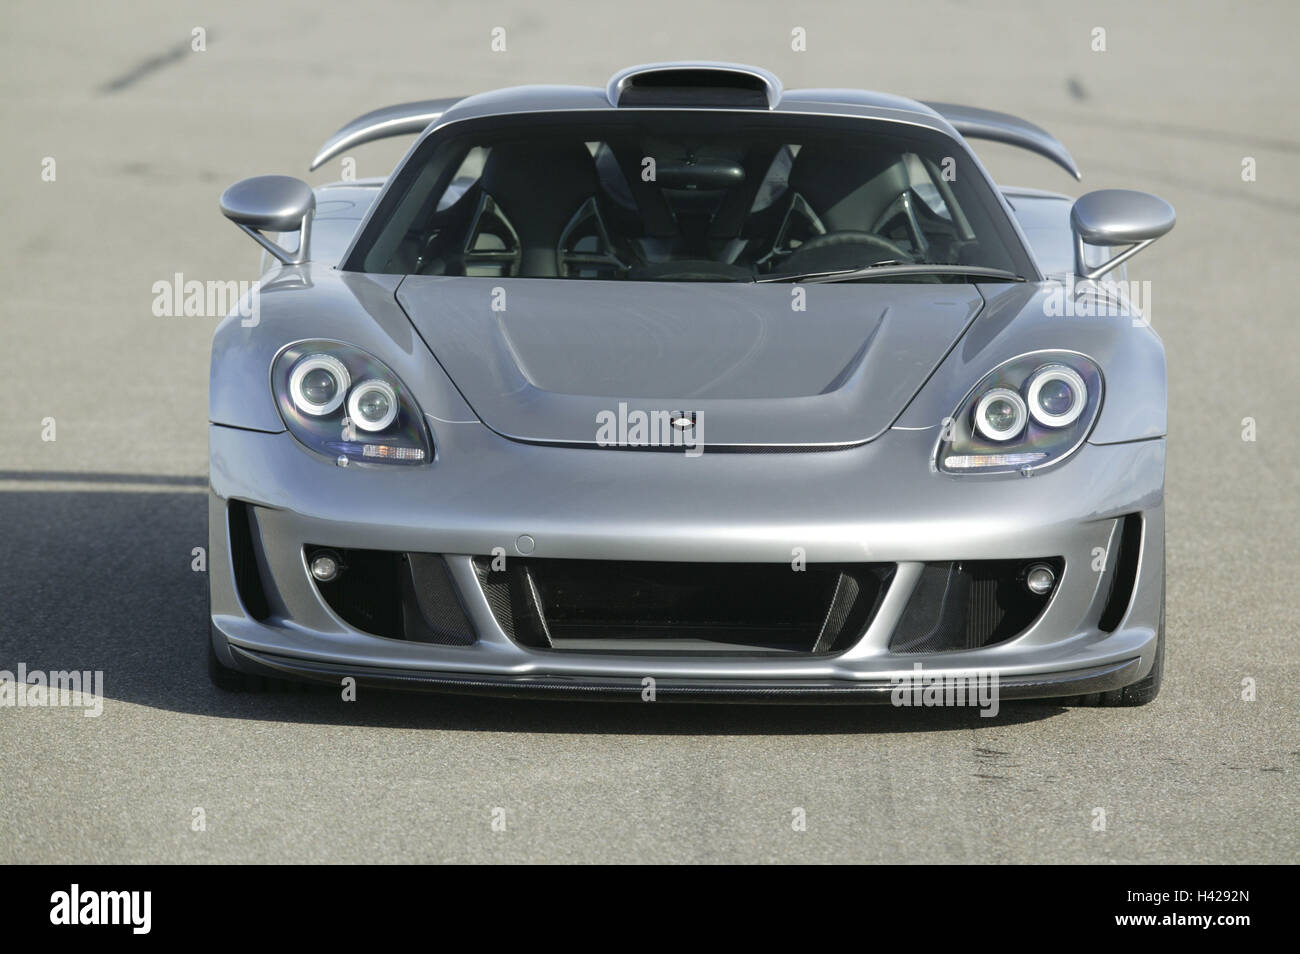 Gemballa Porsche, 'Mirage GT', silver, front view Stock Photo